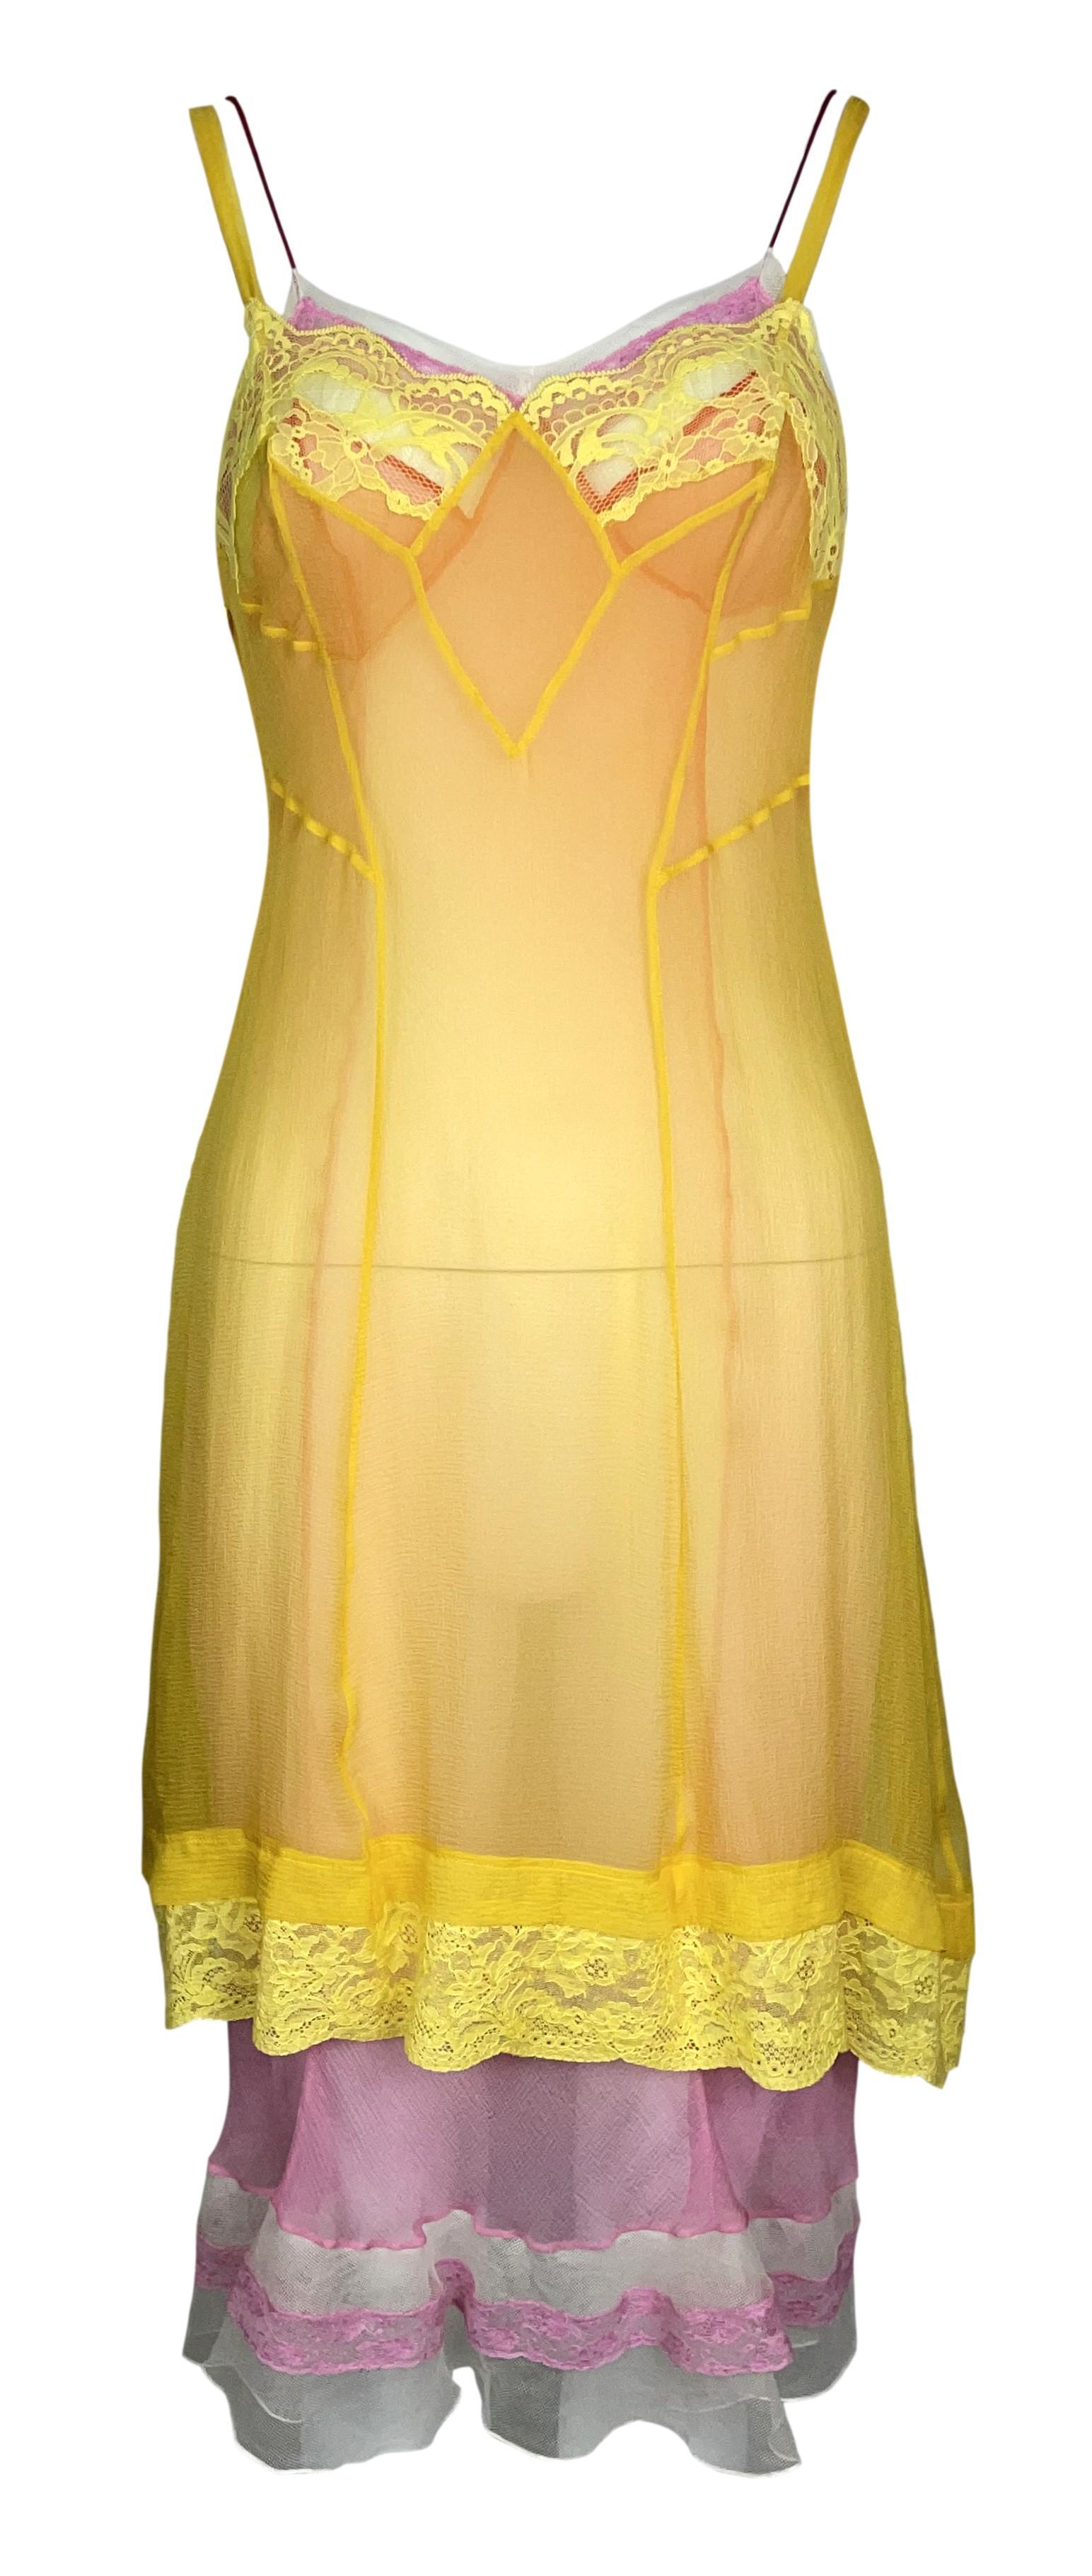 S/S 2005 Christian Dior by John Galliano Runway Sheer Pink & Yellow Silk Dress